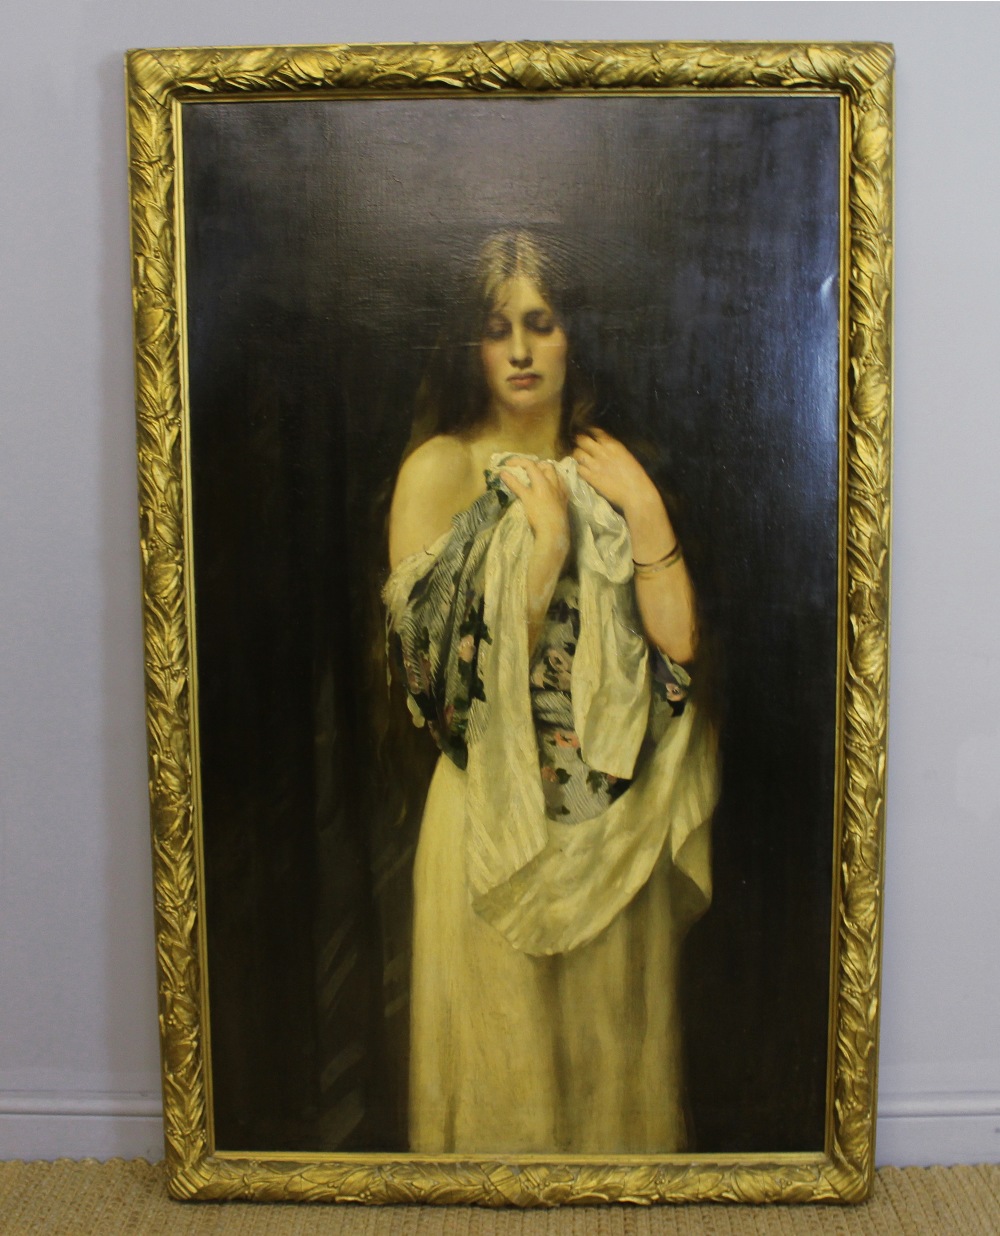 Thomas Benjamin Kennington (1856-1916) - Oil painting of massive proportions - 'Pandora' - Full